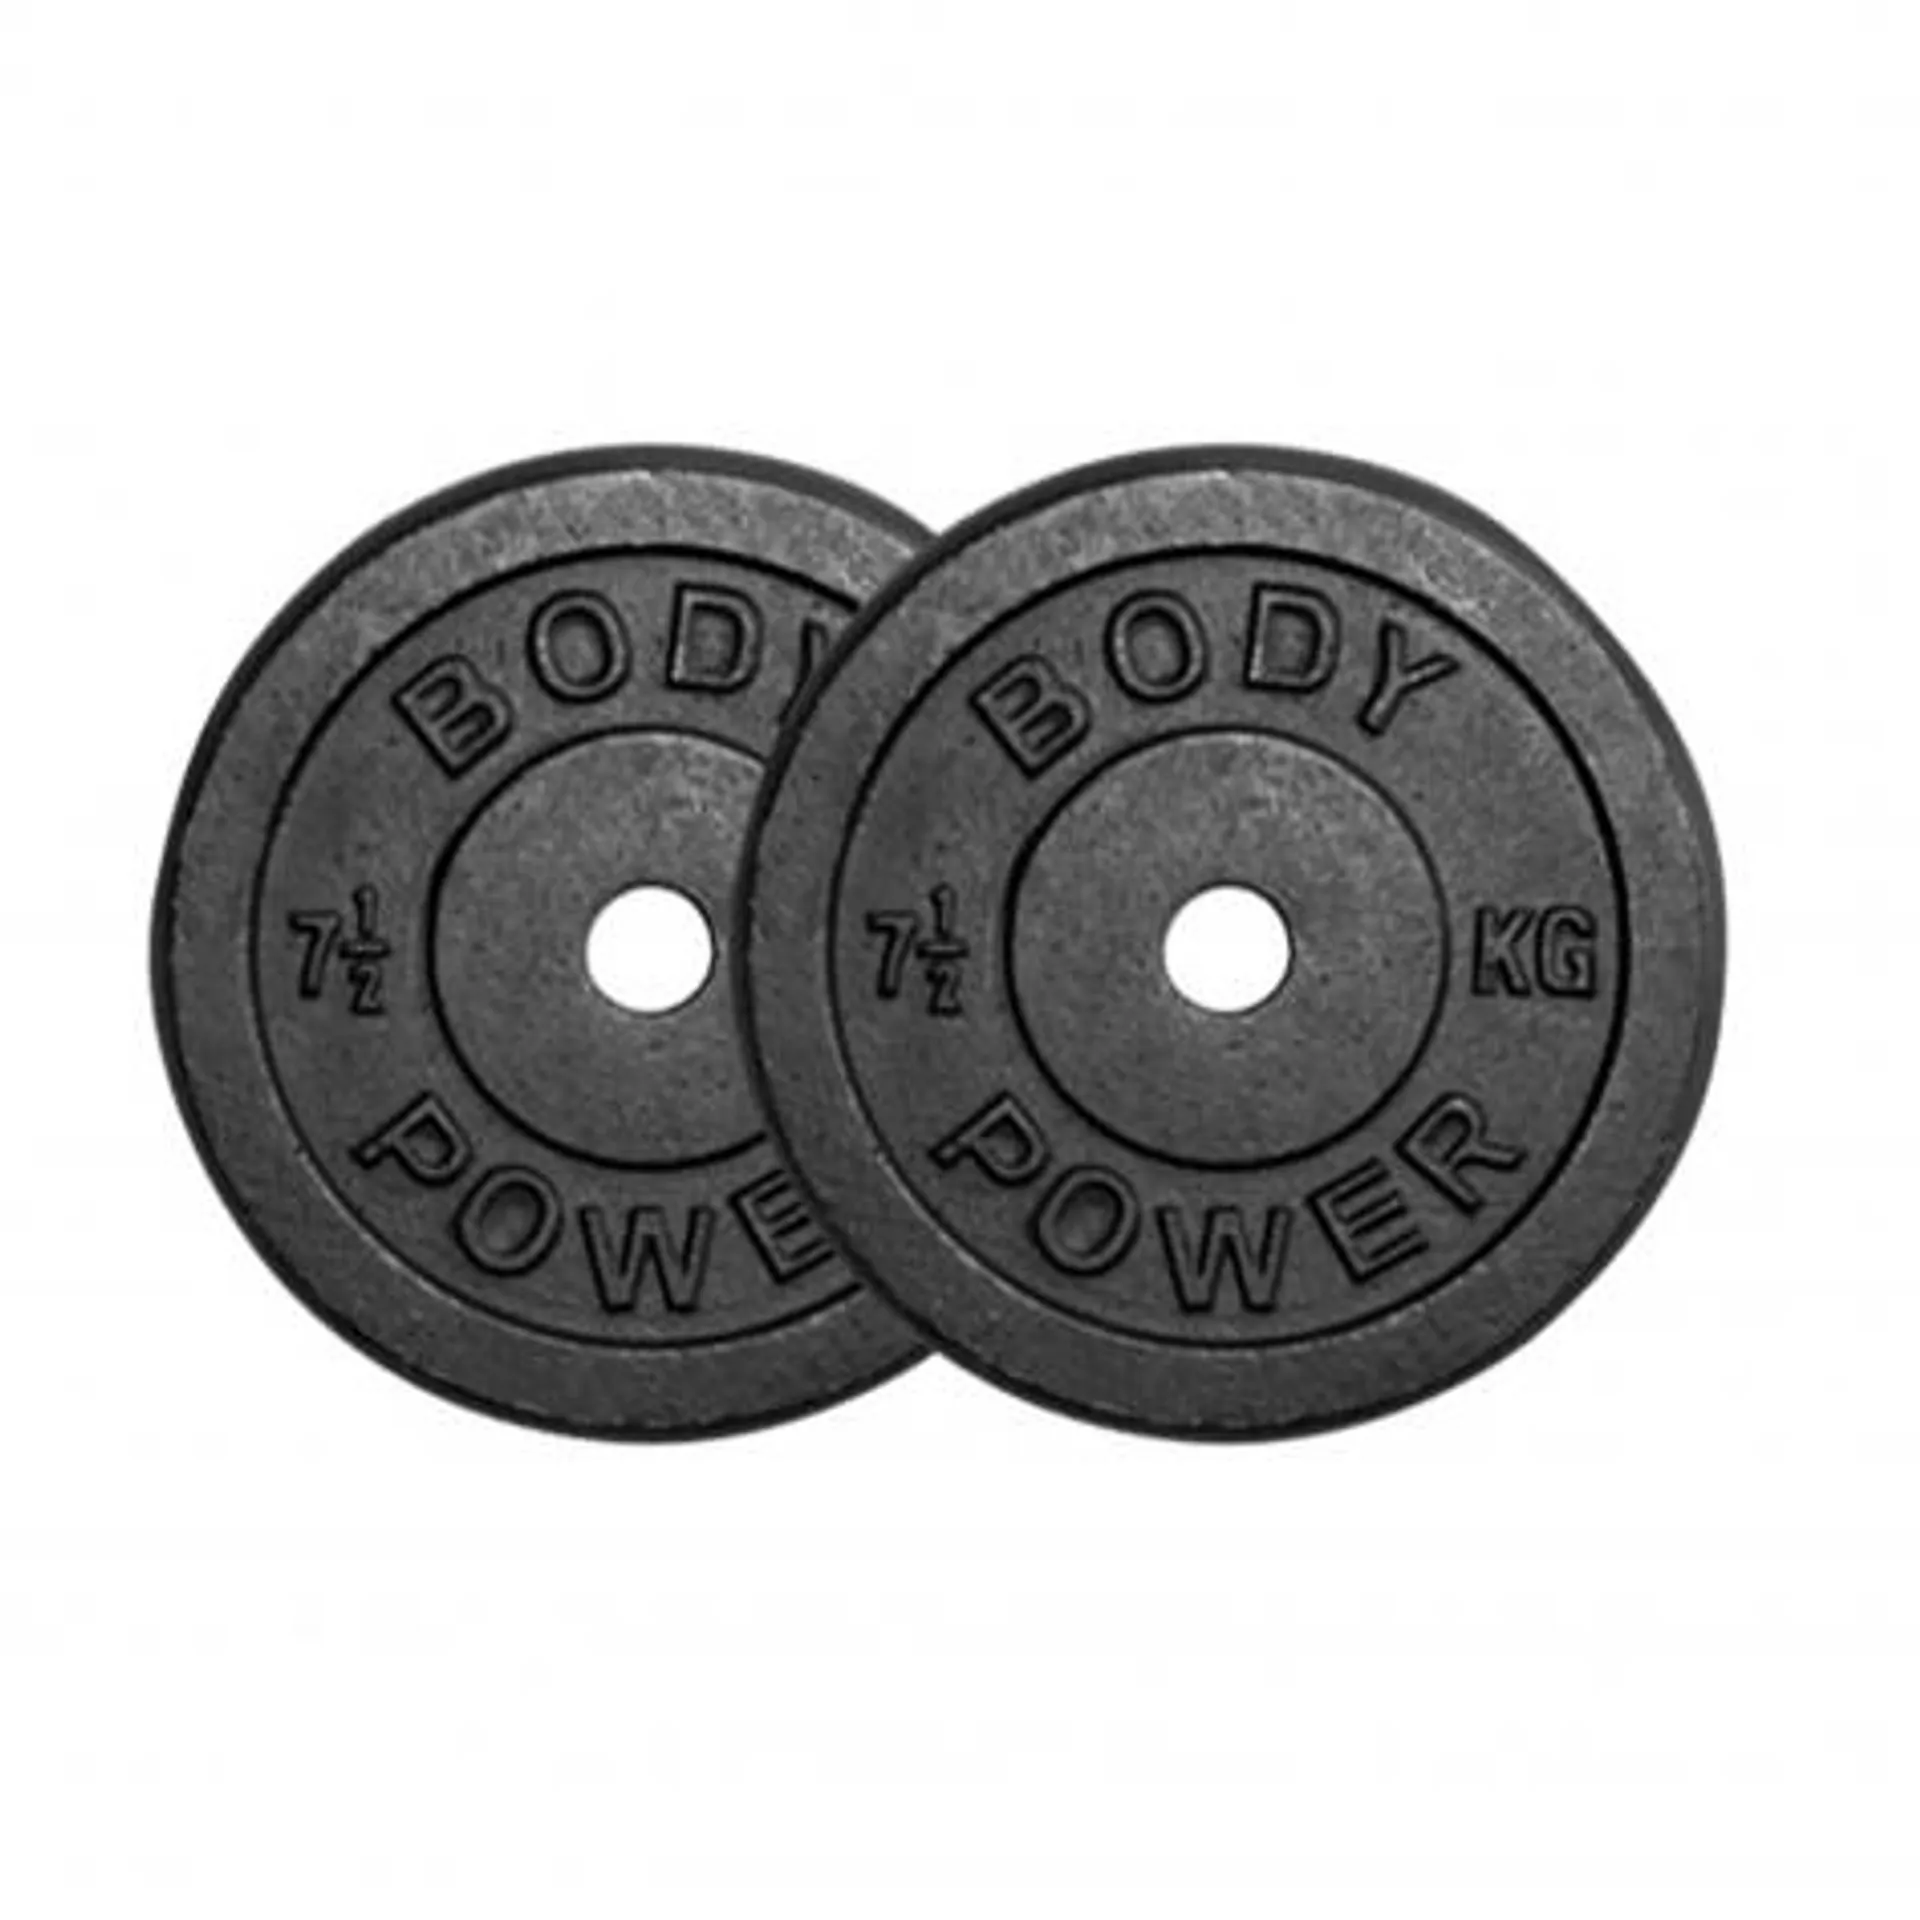 Body Power 7.5Kg Cast Iron Standard Weight Plates (x2)